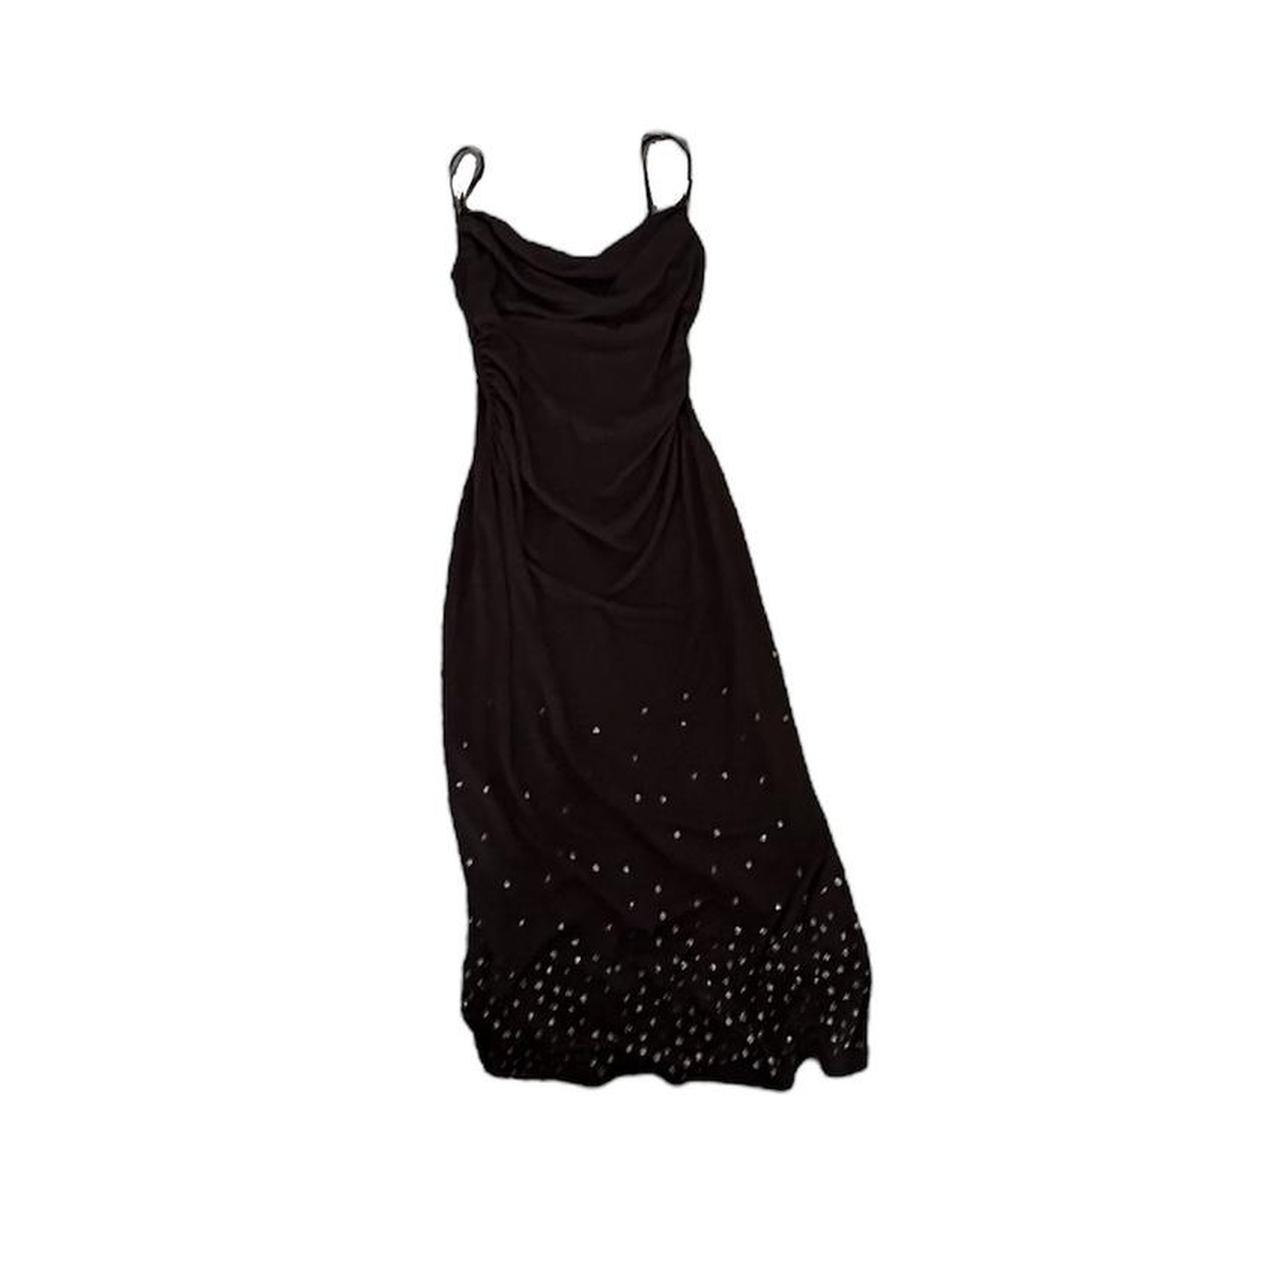 pretty formal black dress 🖤 super cute and sparkly !... - Depop